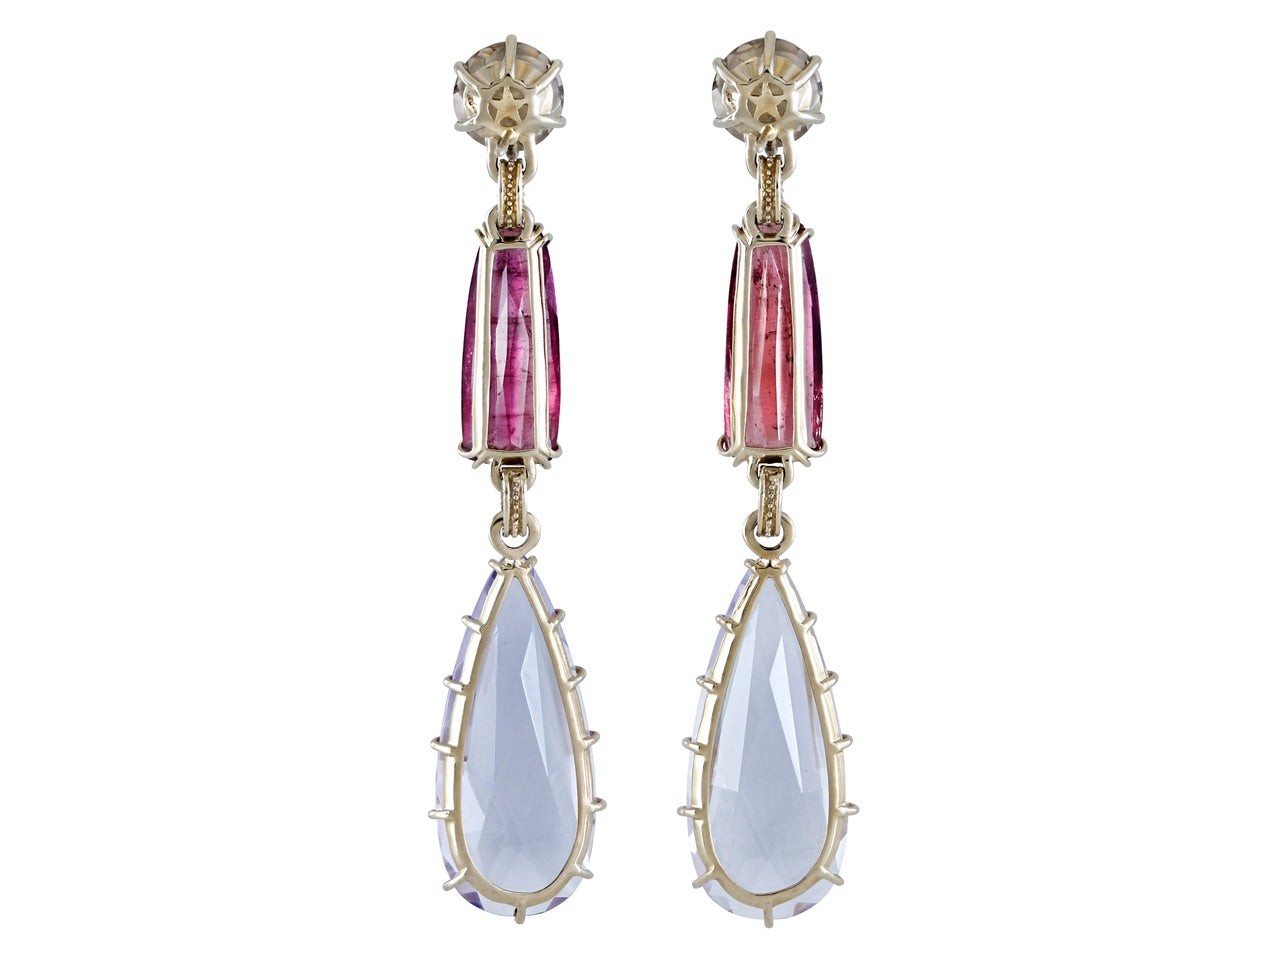 H.Stern Pink Tourmaline, Amethyst and Smoky Quartz Ear pendants in 18K Gold